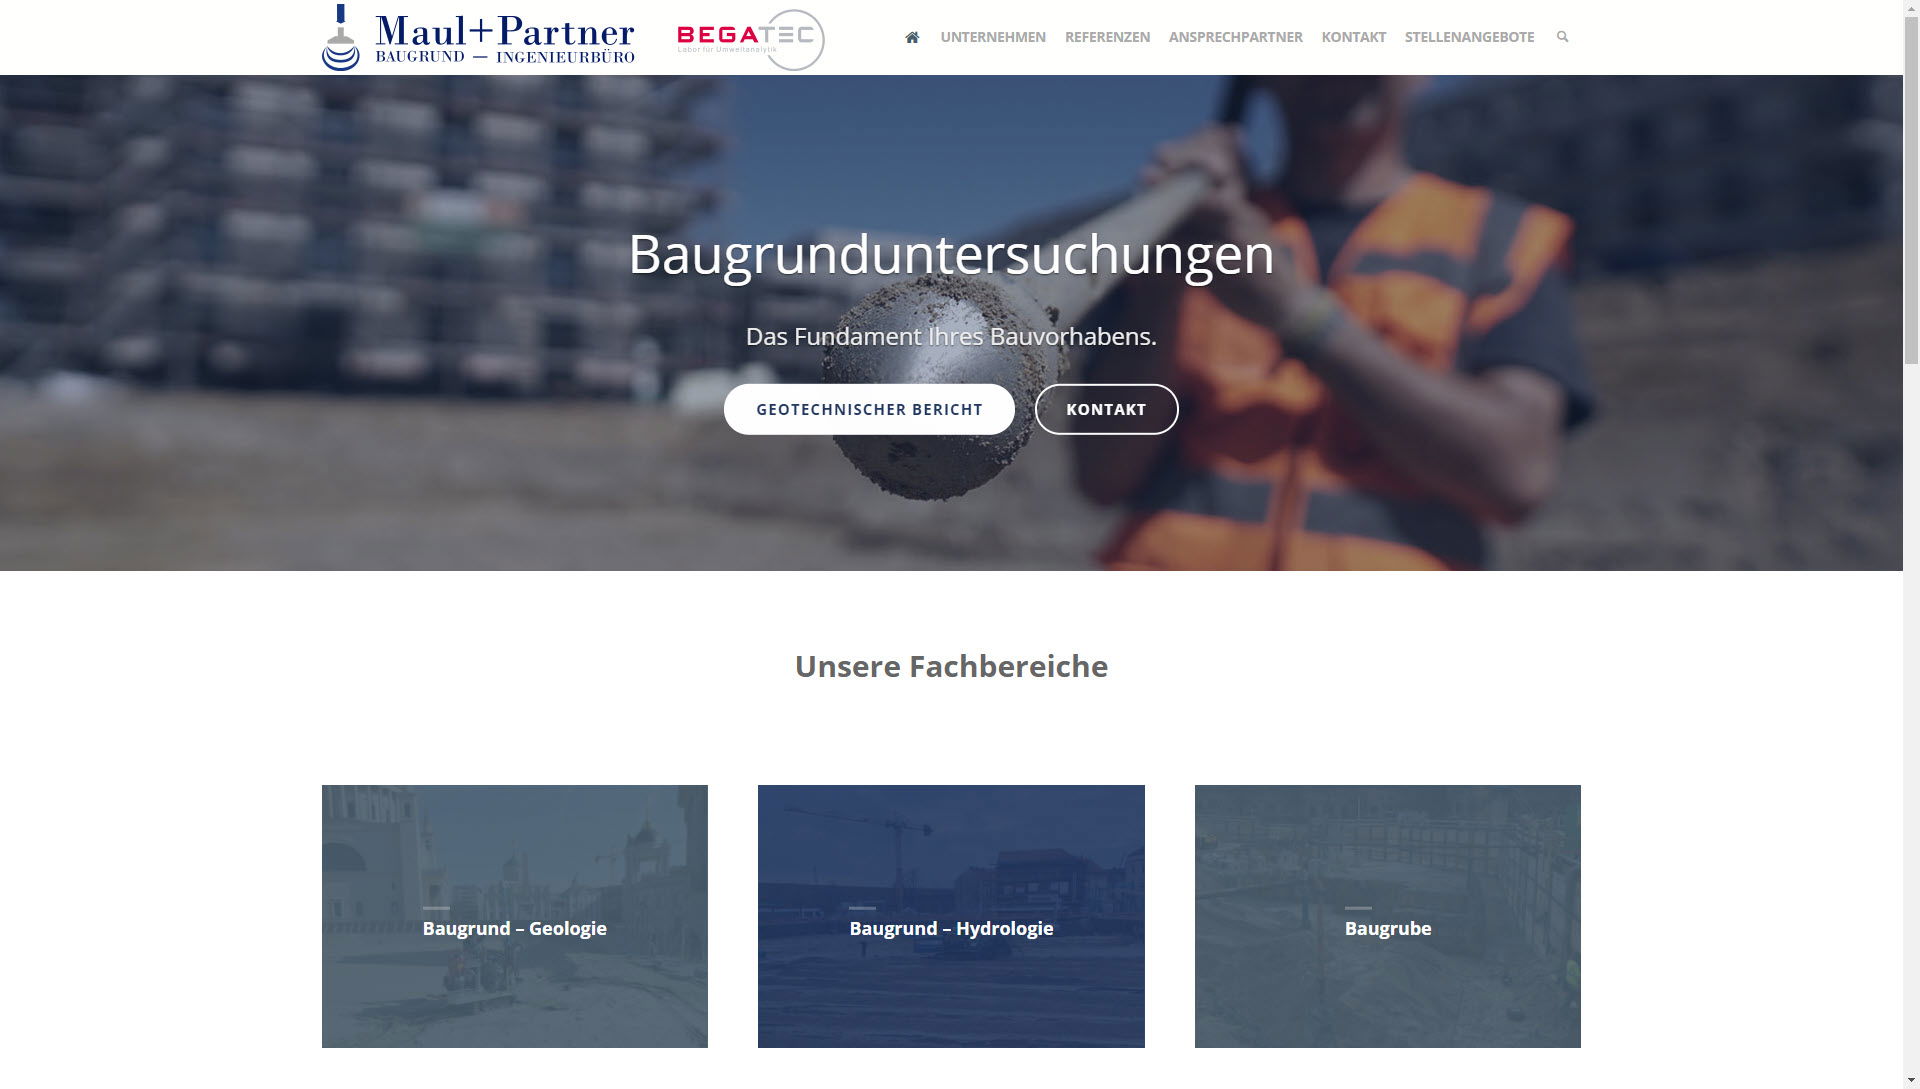 Maul & Partner Baugrund Ingenieurbüro GmbH